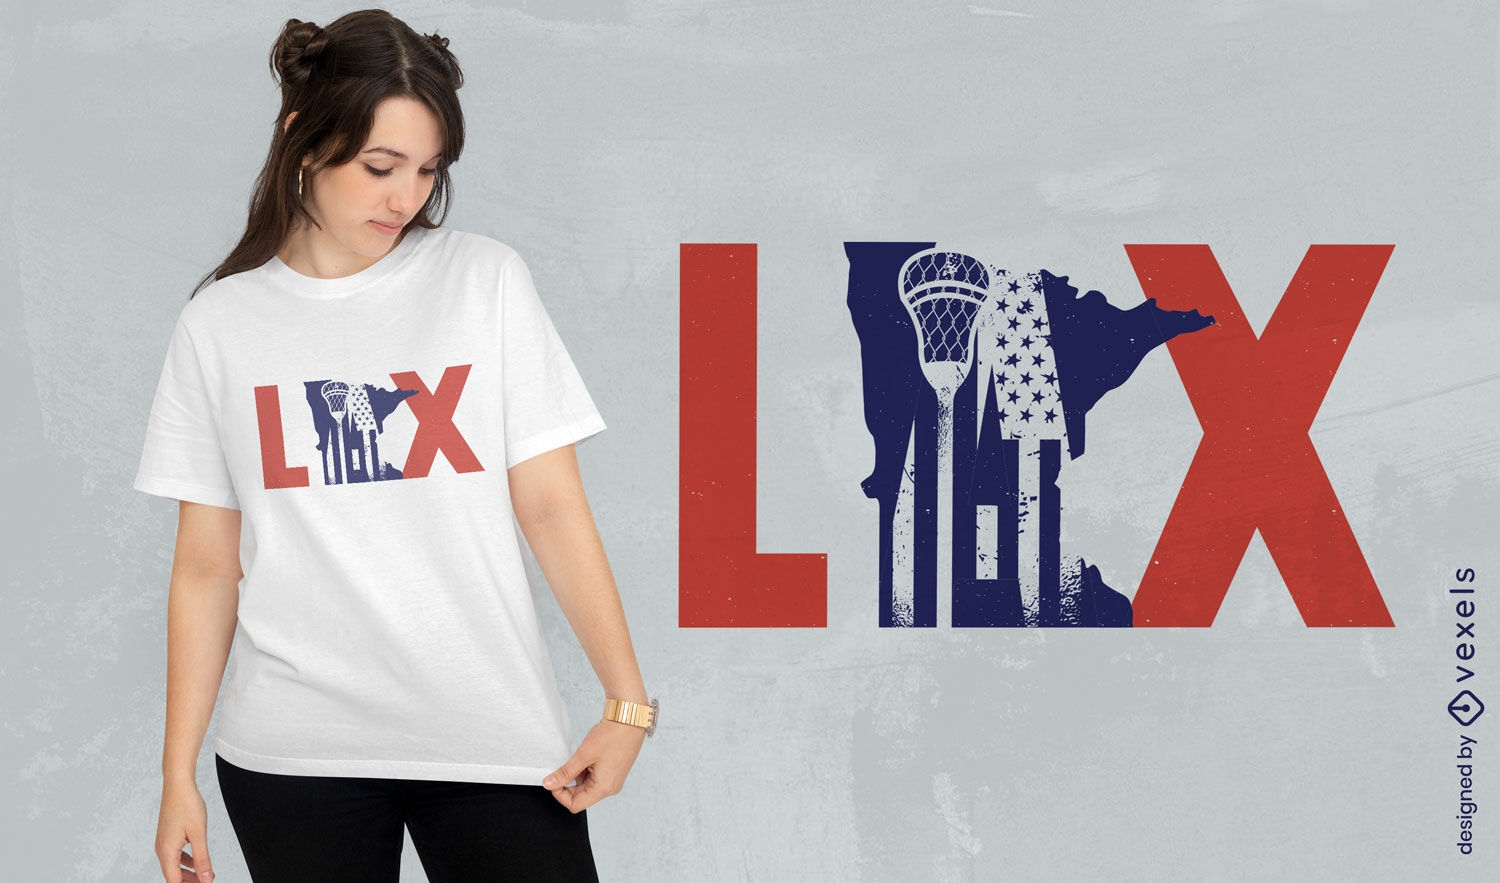 Lacrosse sport quote t-shirt design